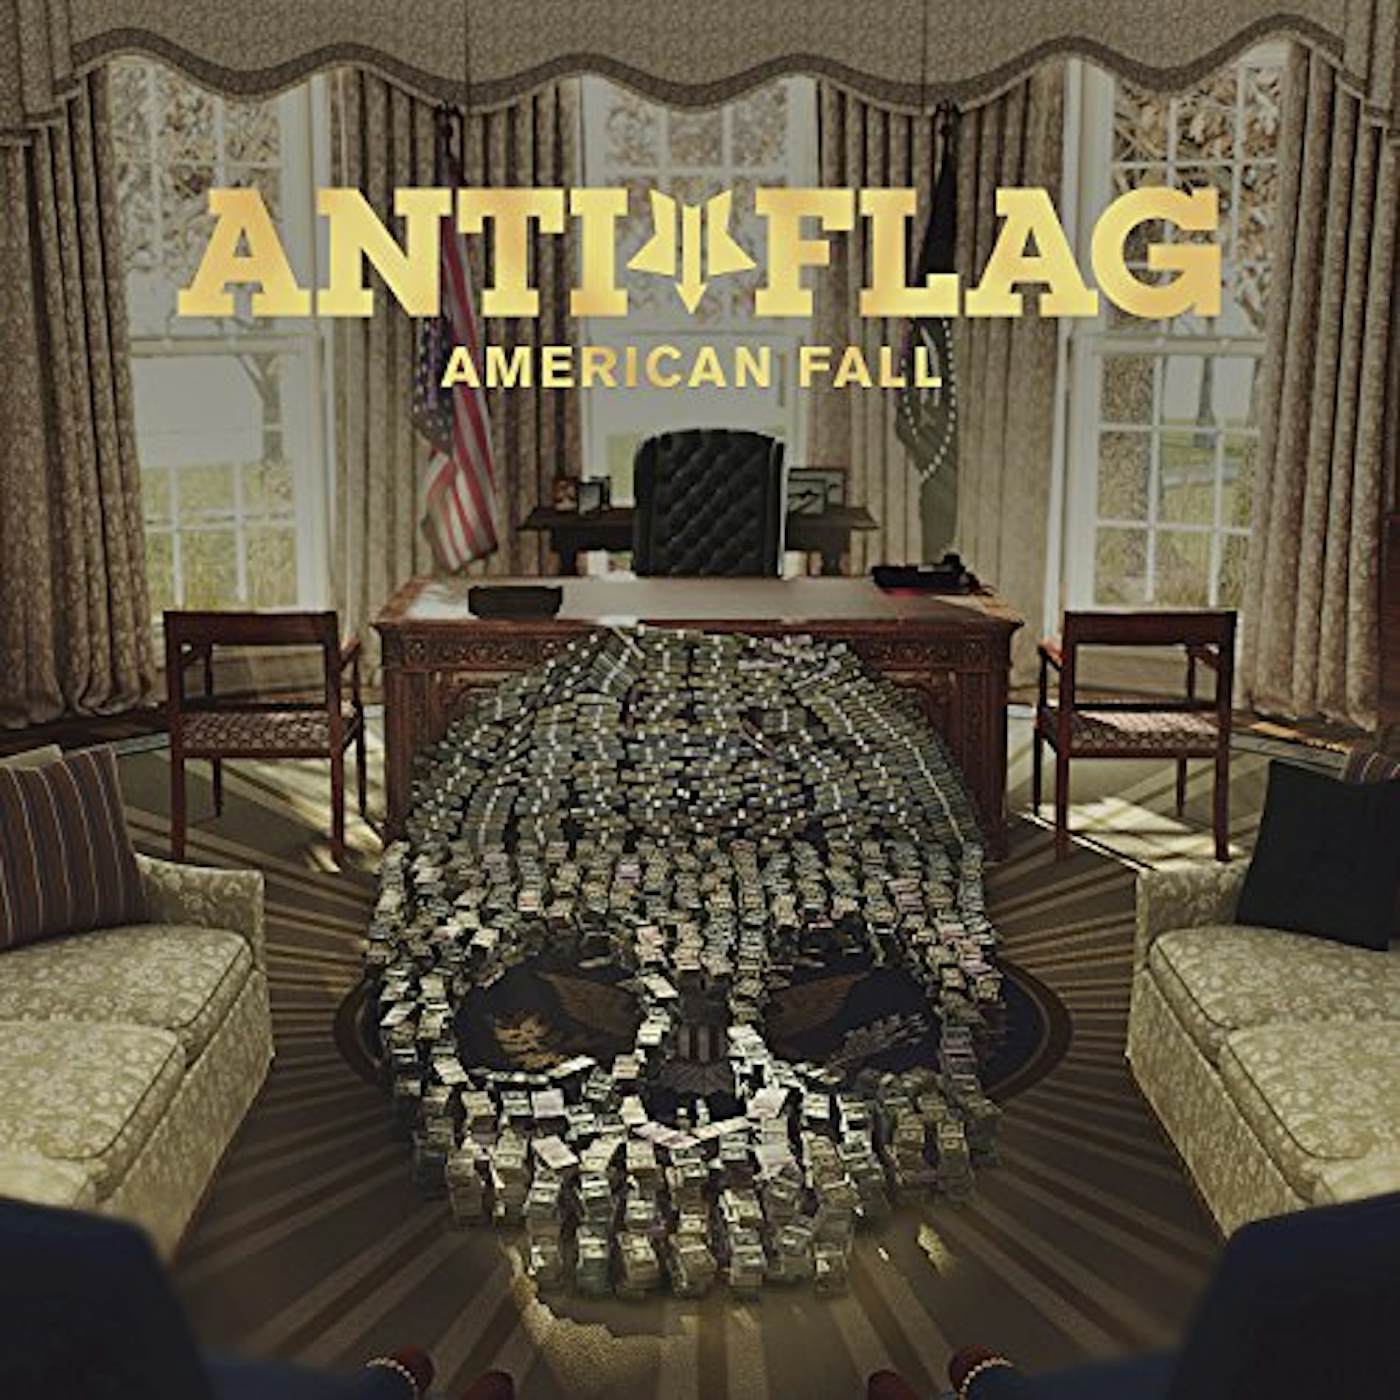 Anti-Flag AMERICAN FALL CD